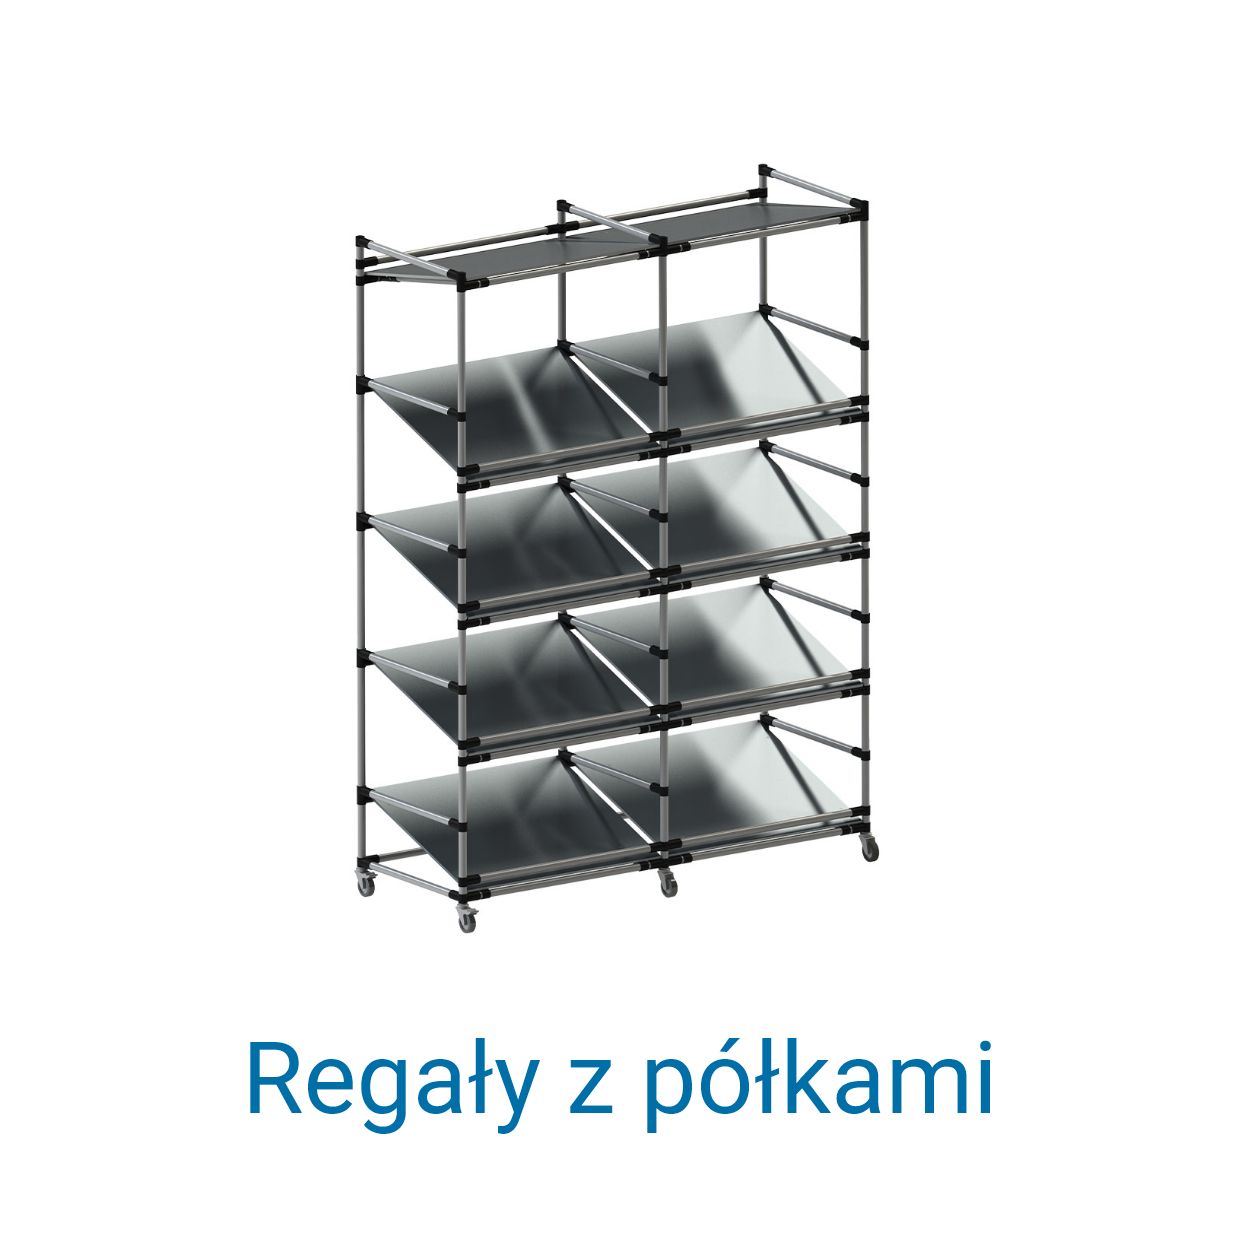 Shelf Rack Category PL